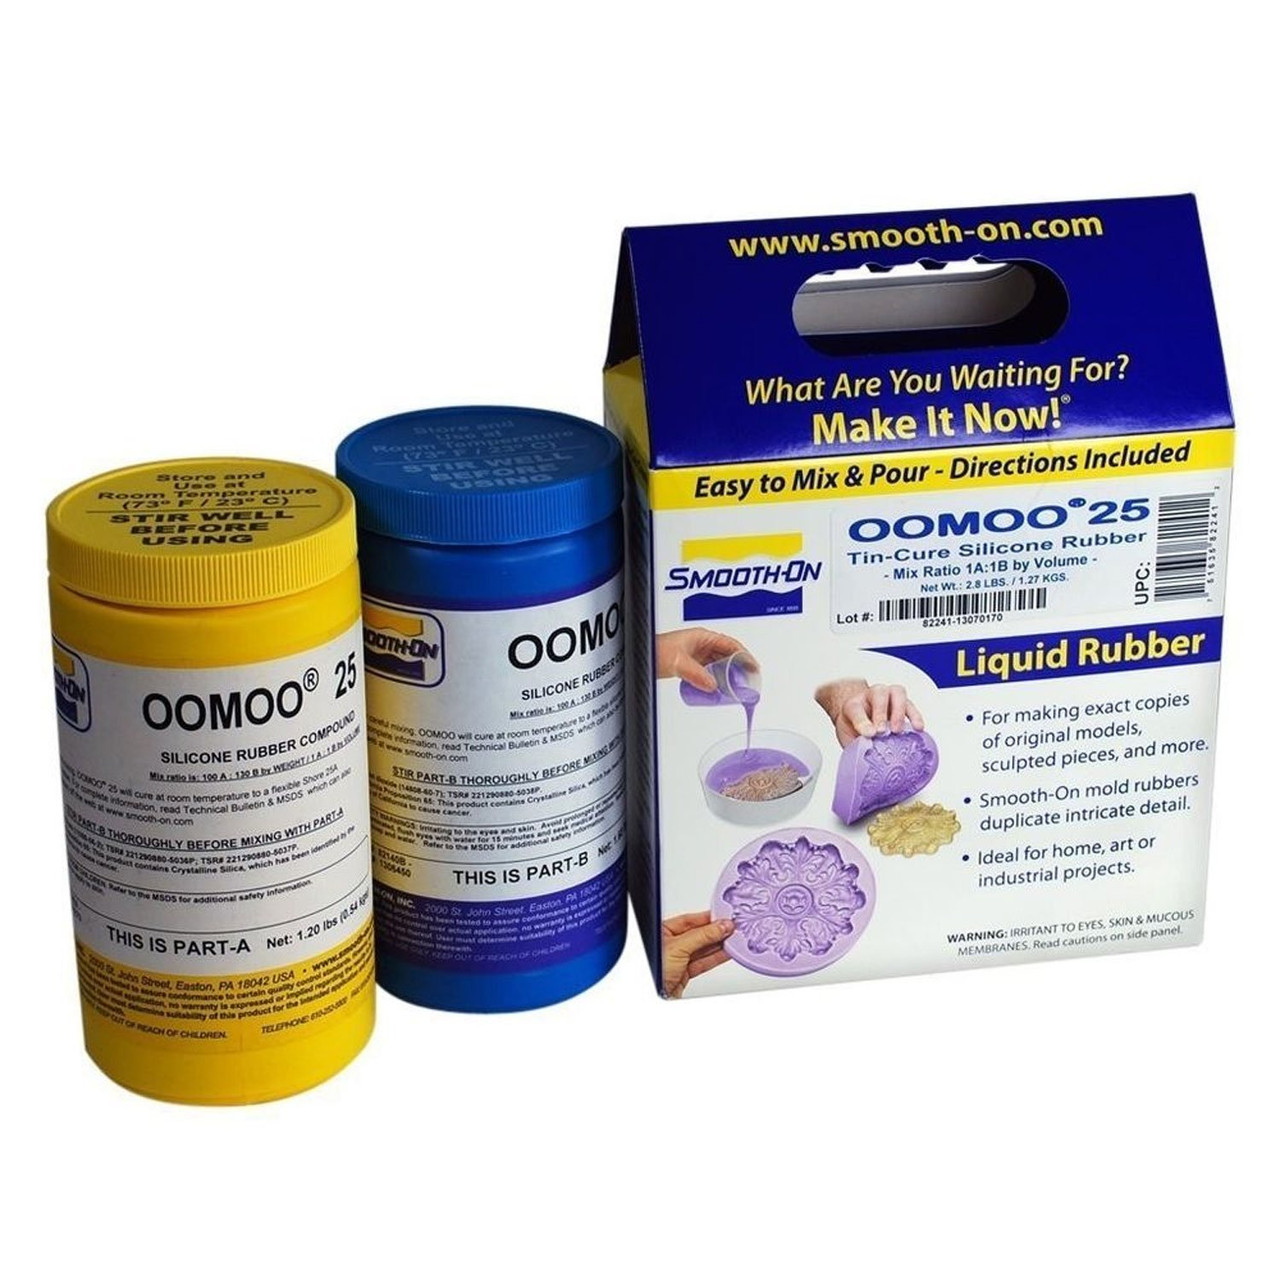 OOMOO™ 25 Product Information